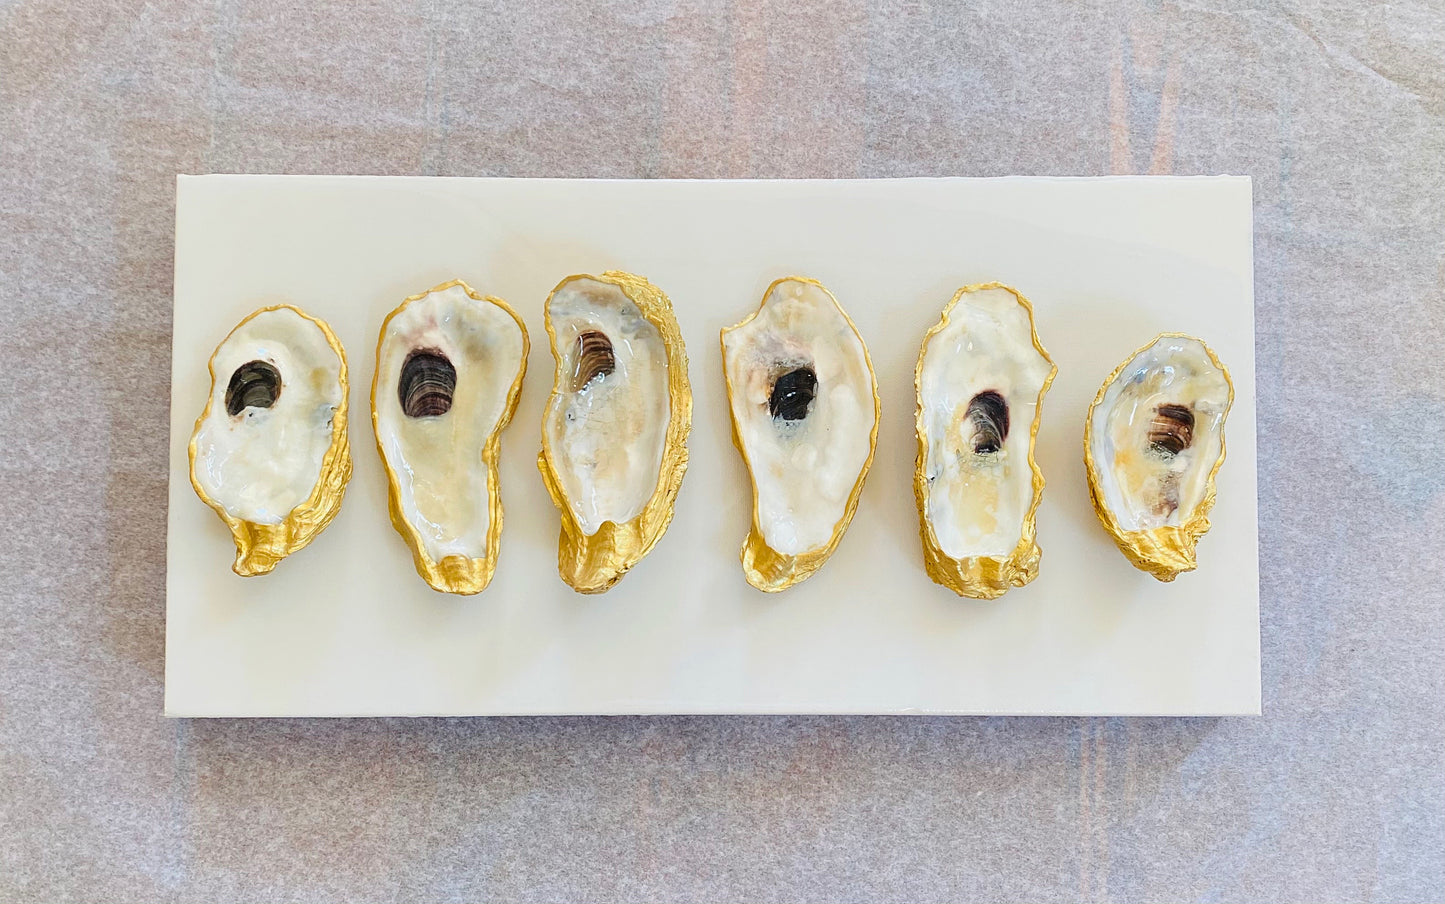 Six Gold Trim Glazed Oysters on a 10x20 Canvas